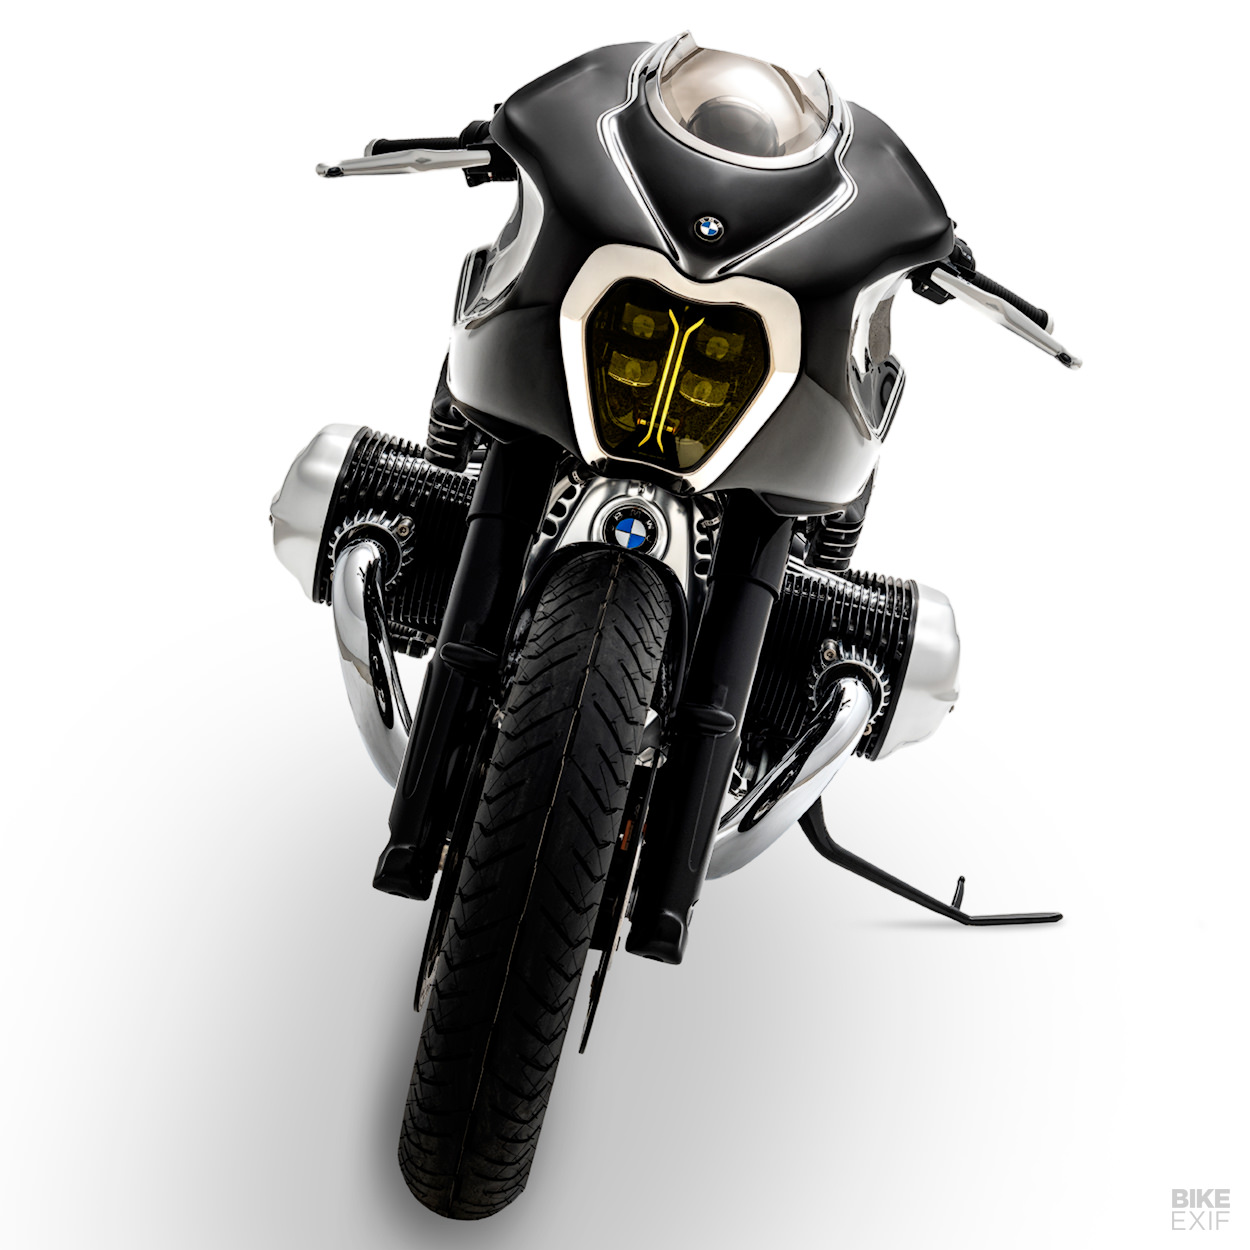 Custom BMW R18 cruiser motorcycle by Blechmann